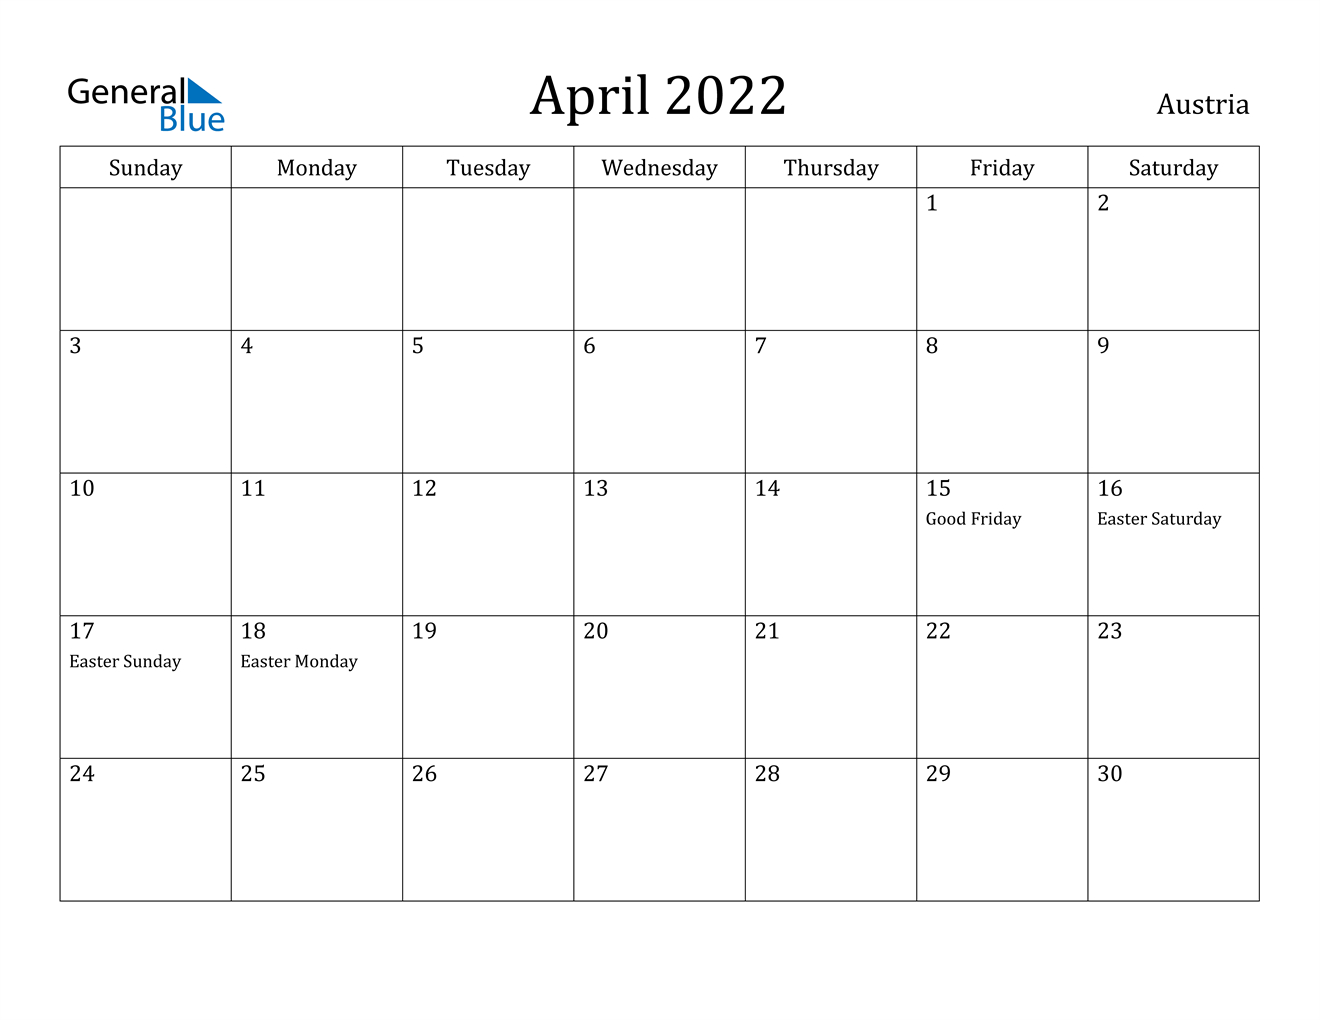 April 2022 Calendar - Austria